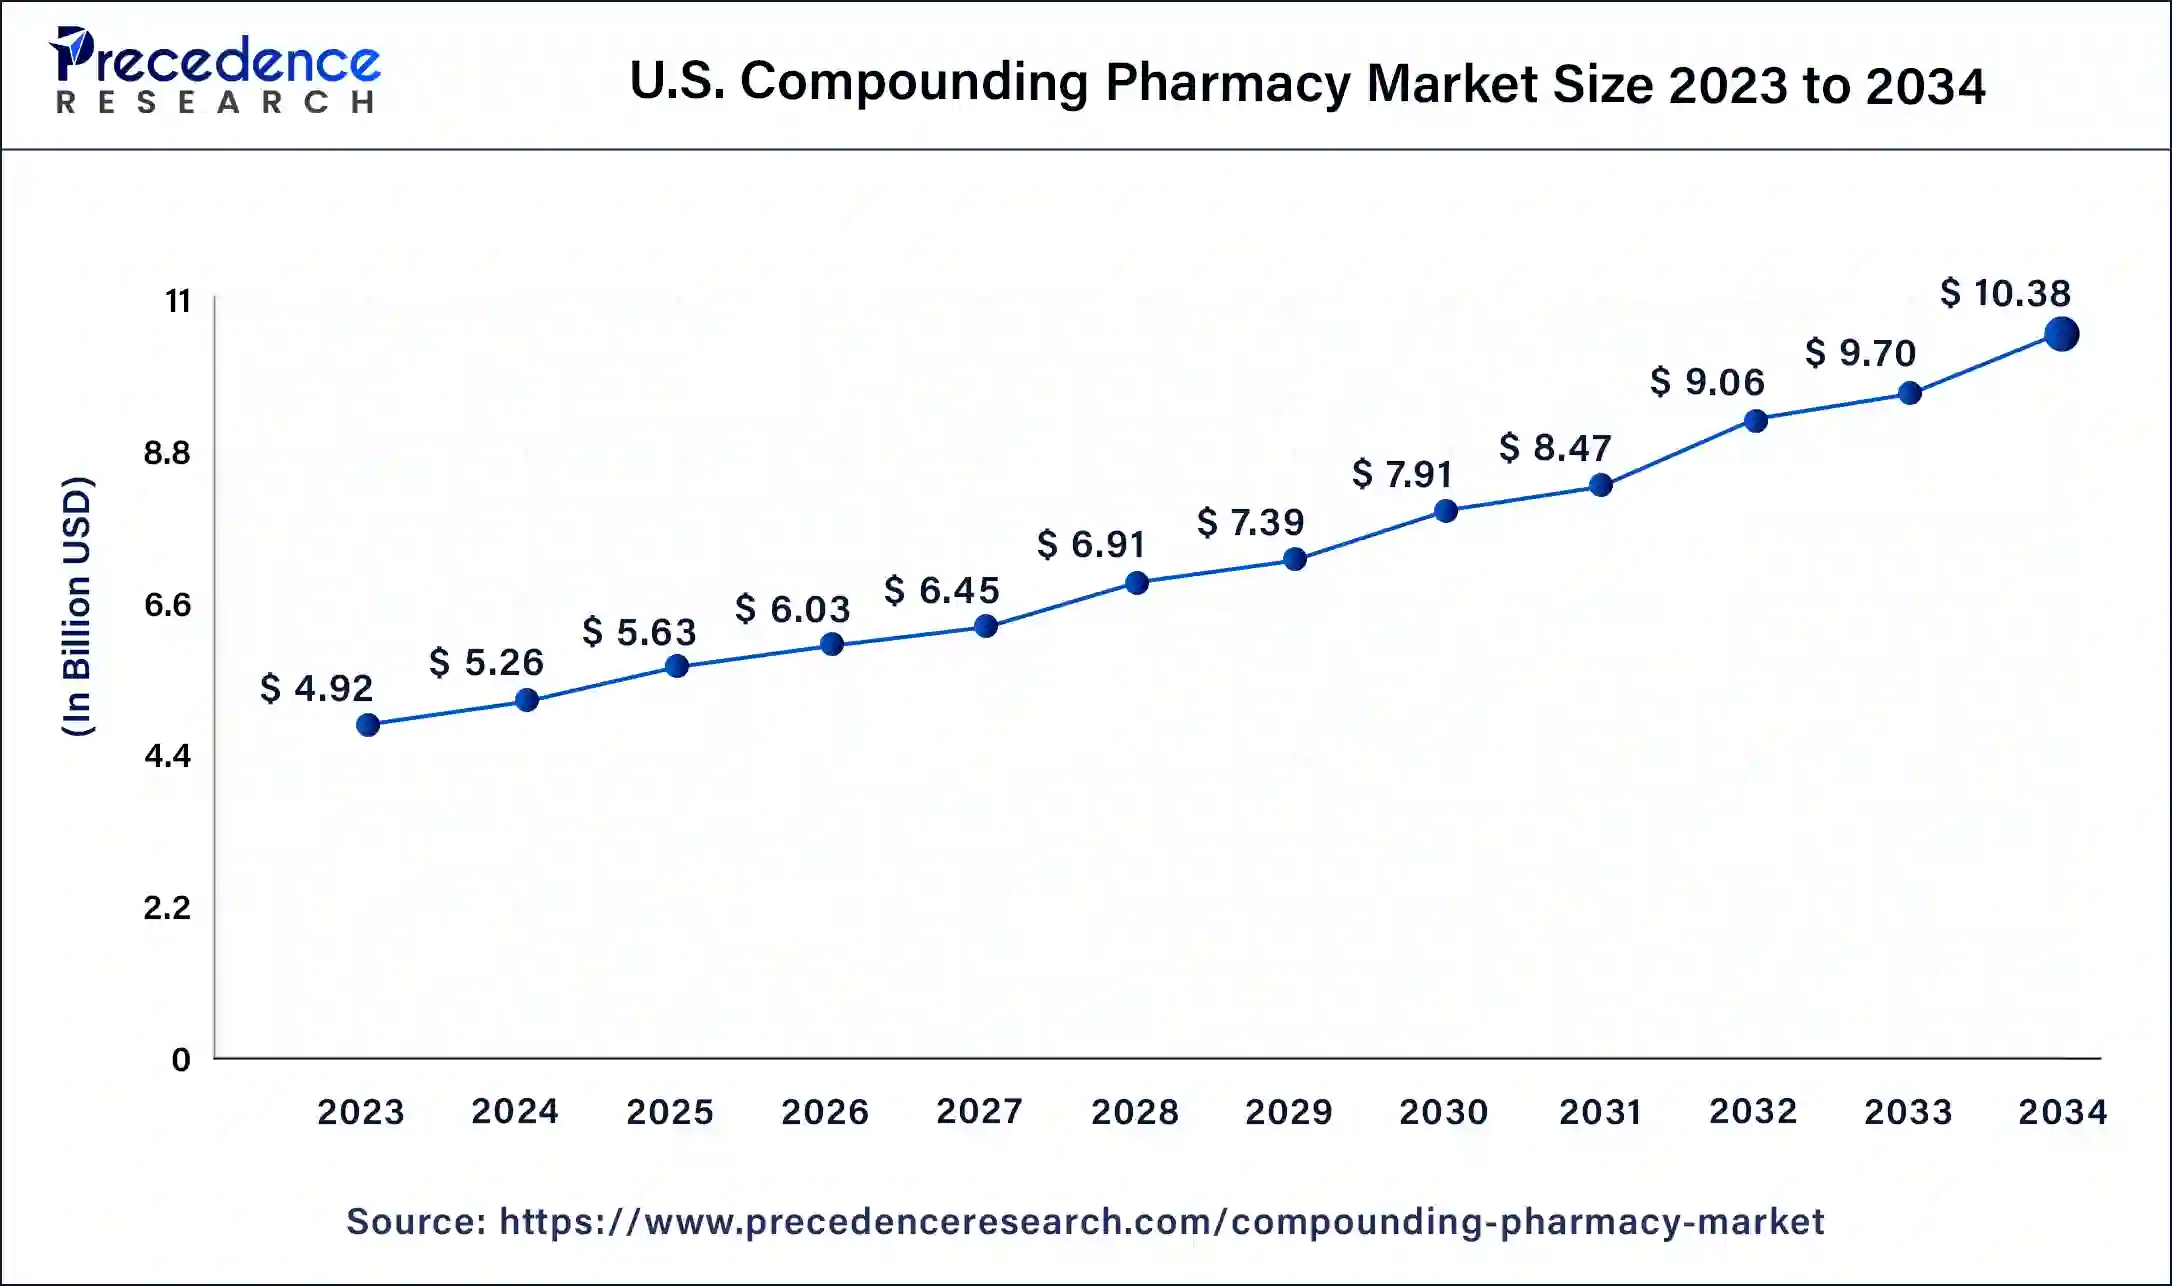 U.S. Compounding Pharmacy Market Size 2023 to 2032